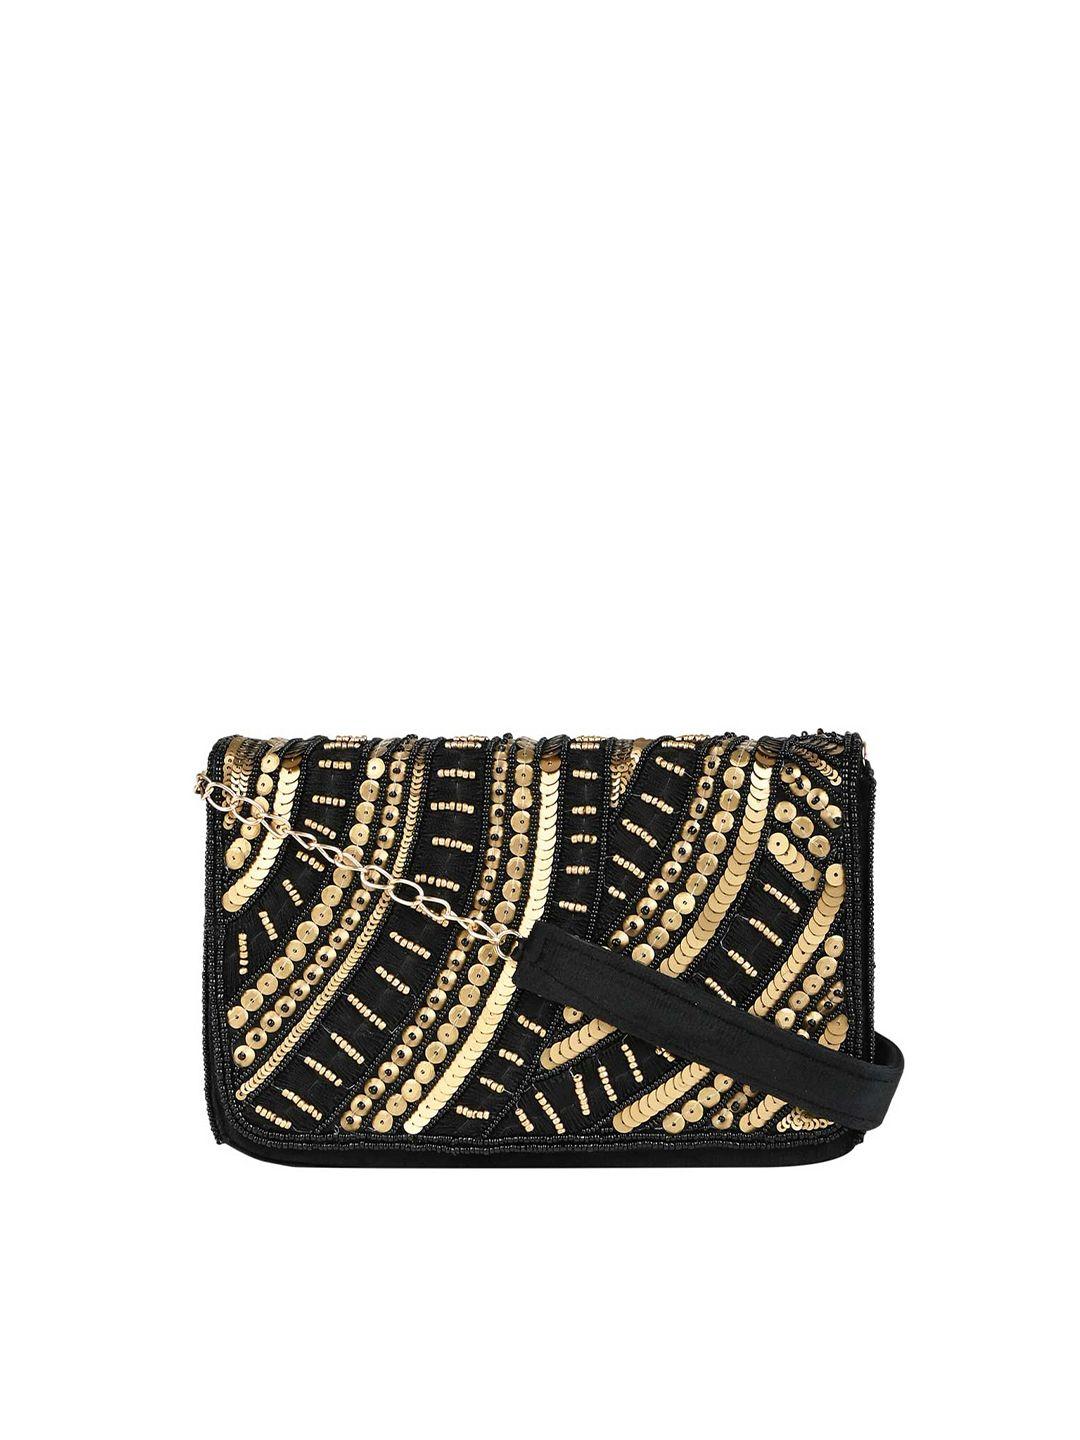 rocia women embellished purse clutch